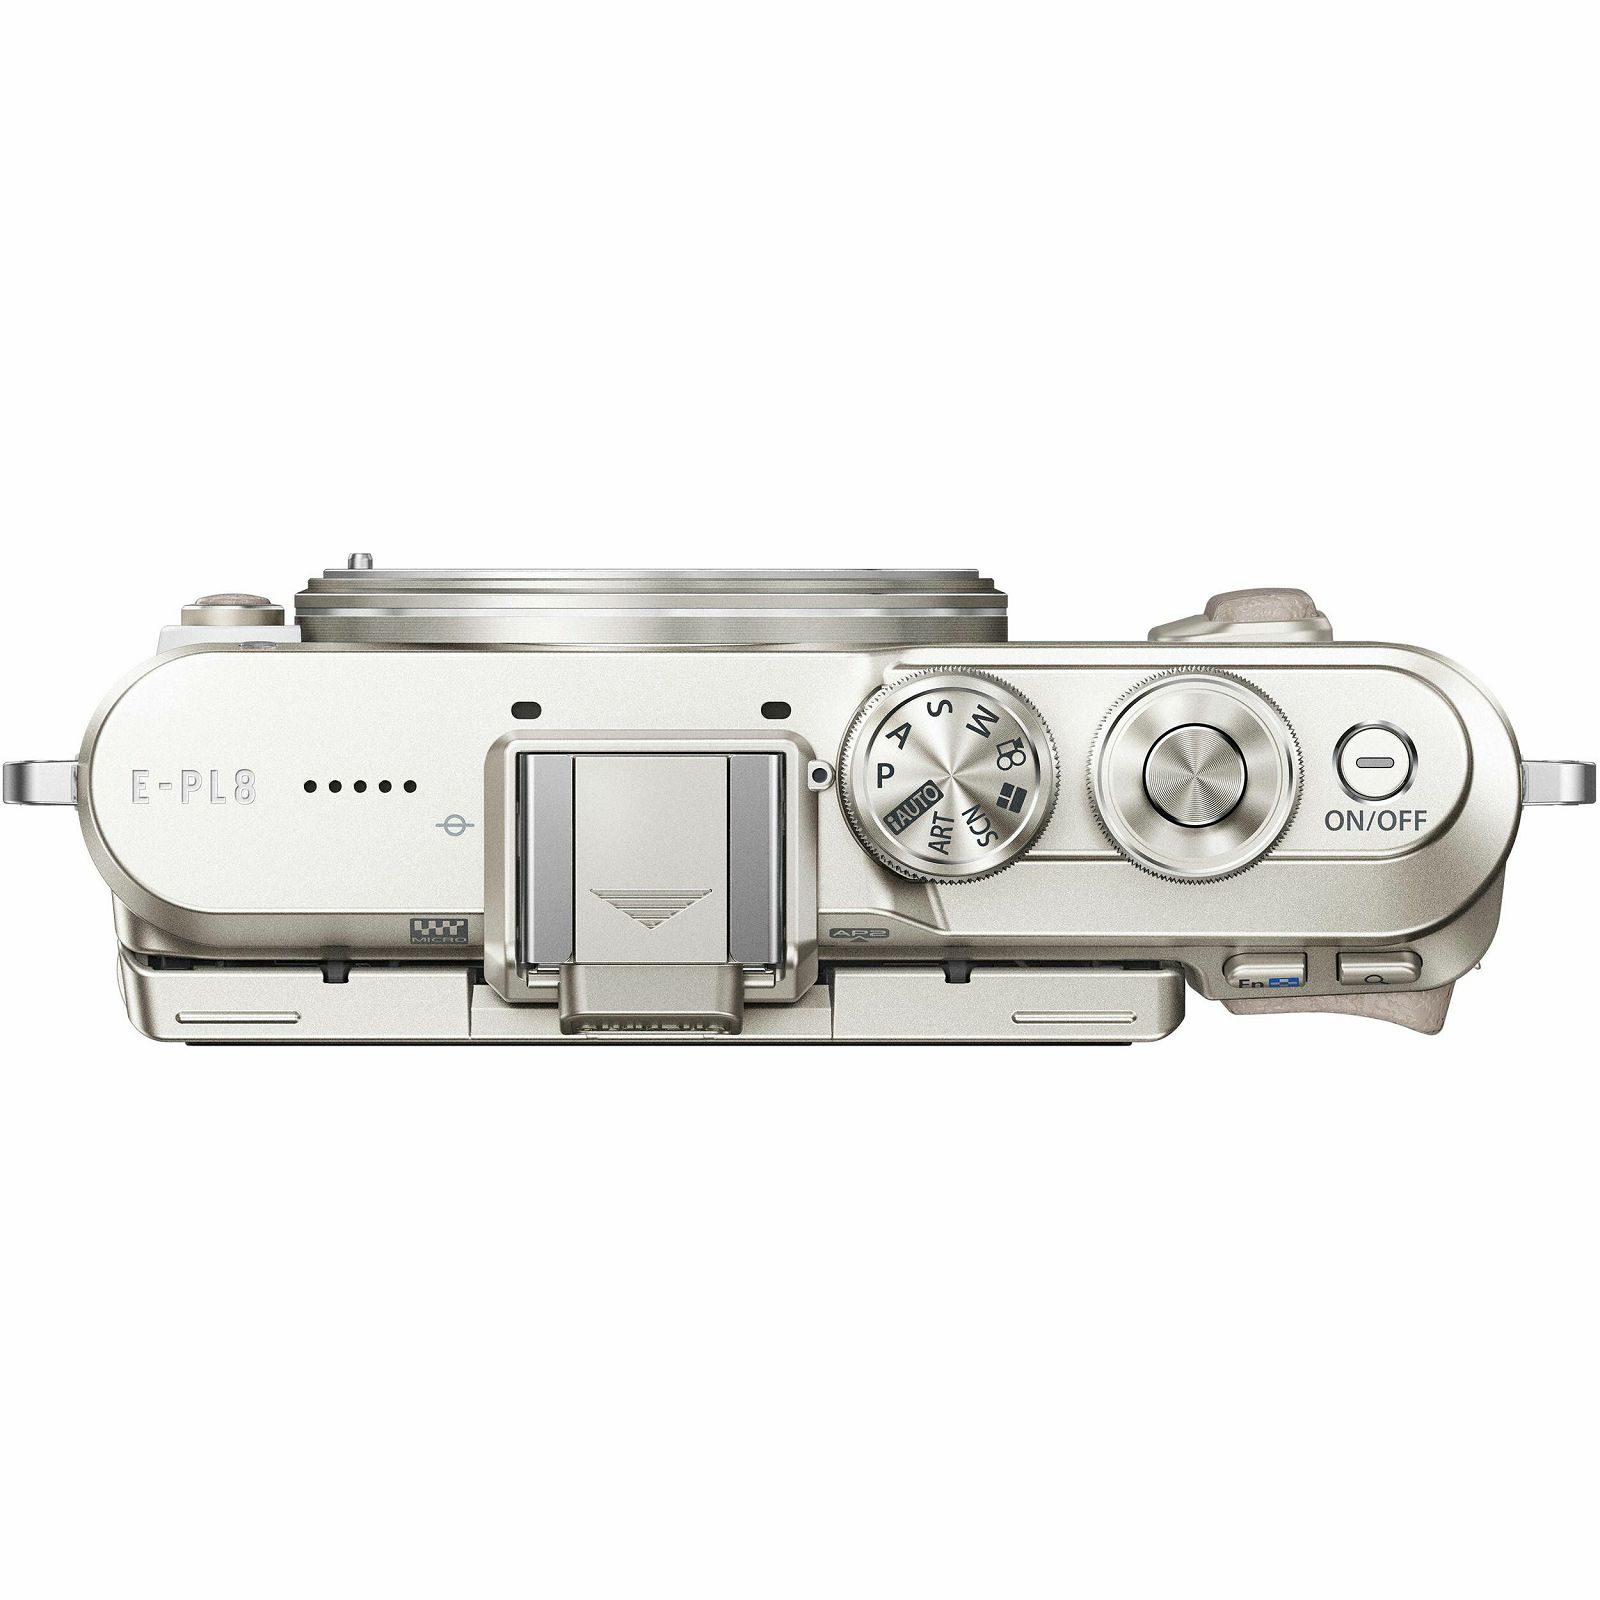 Olympus E-PL8 + 14-42mm White Pancake Zoom Kit wht/slv Bijeli digitalni fotoaparat s objektivom EZ-M1442EZ incl. Charger & Battery 14-42 Micro Four Thirds MFT PEN Camera (V205082WE000)